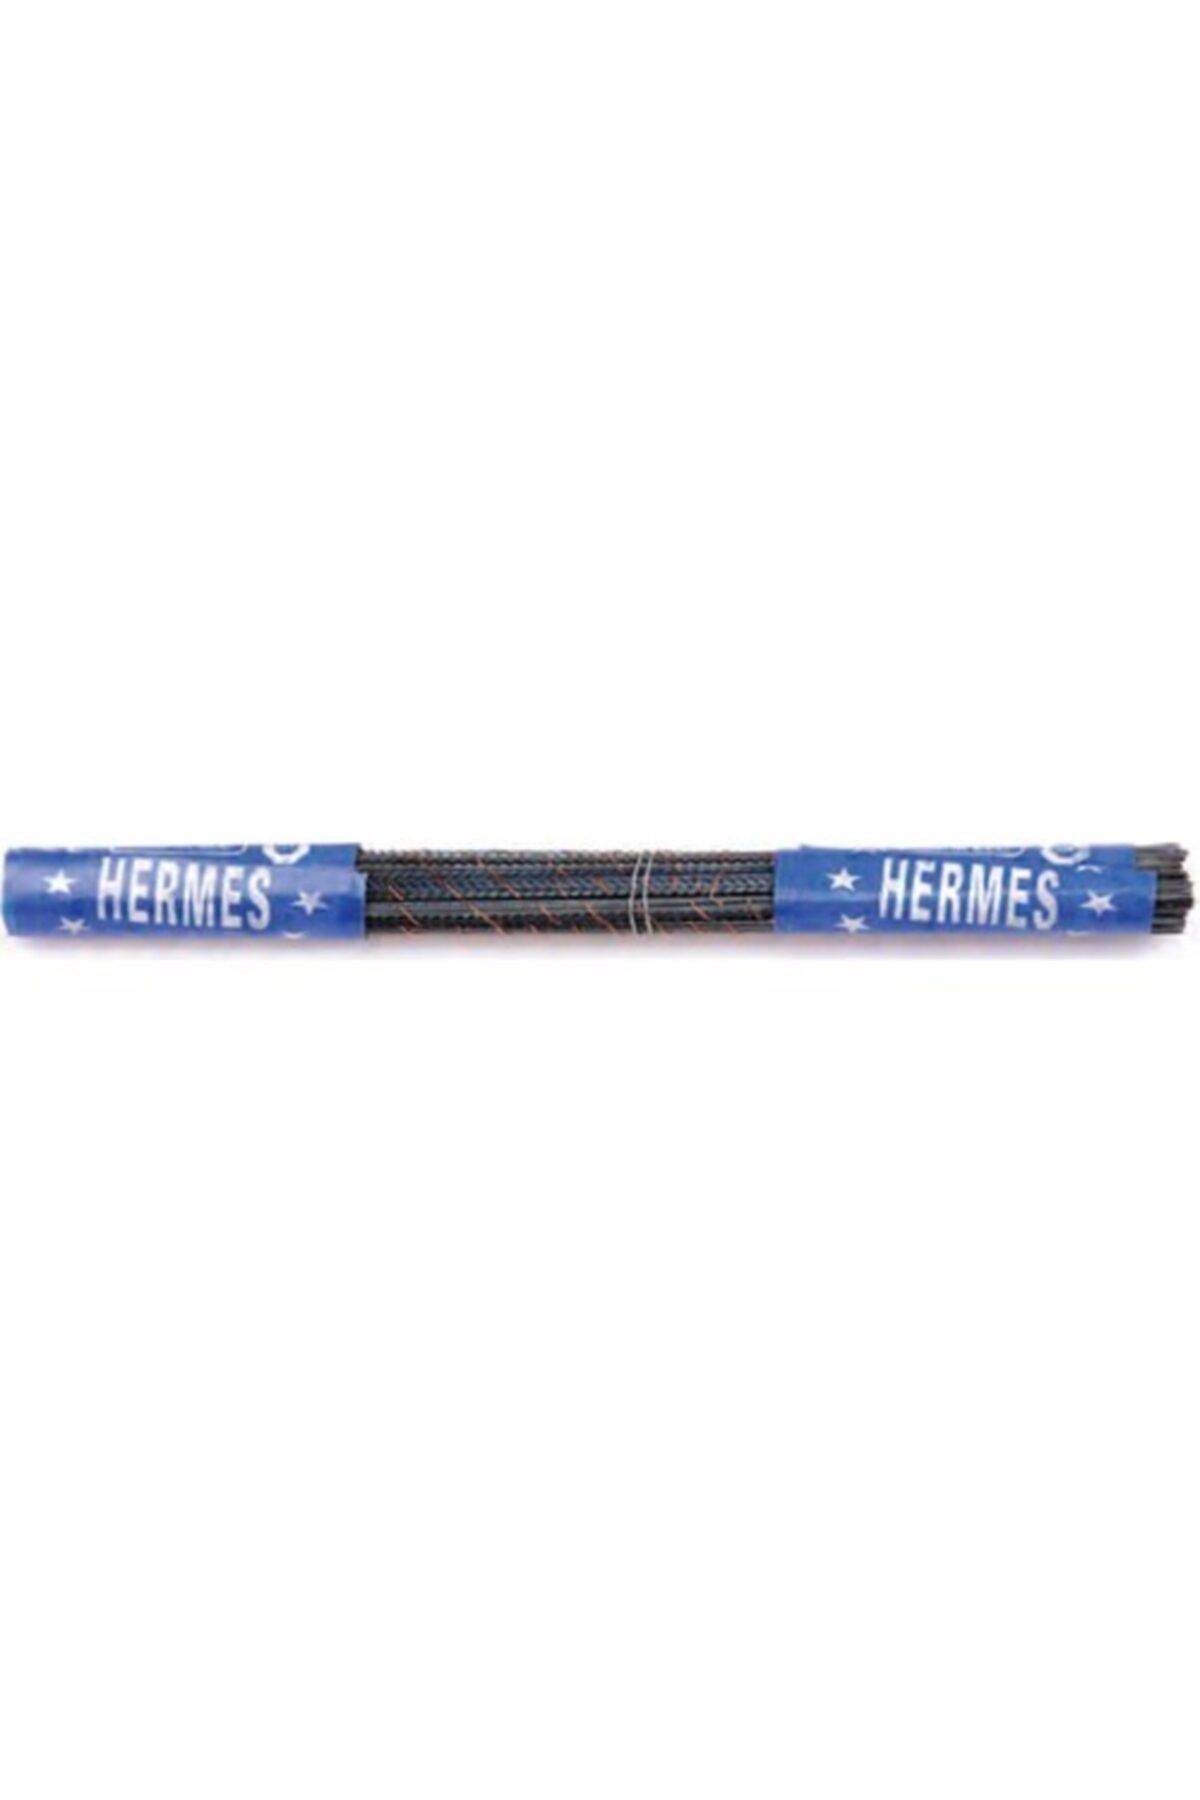 Hermes Kıl Testere Ağzı 144lü